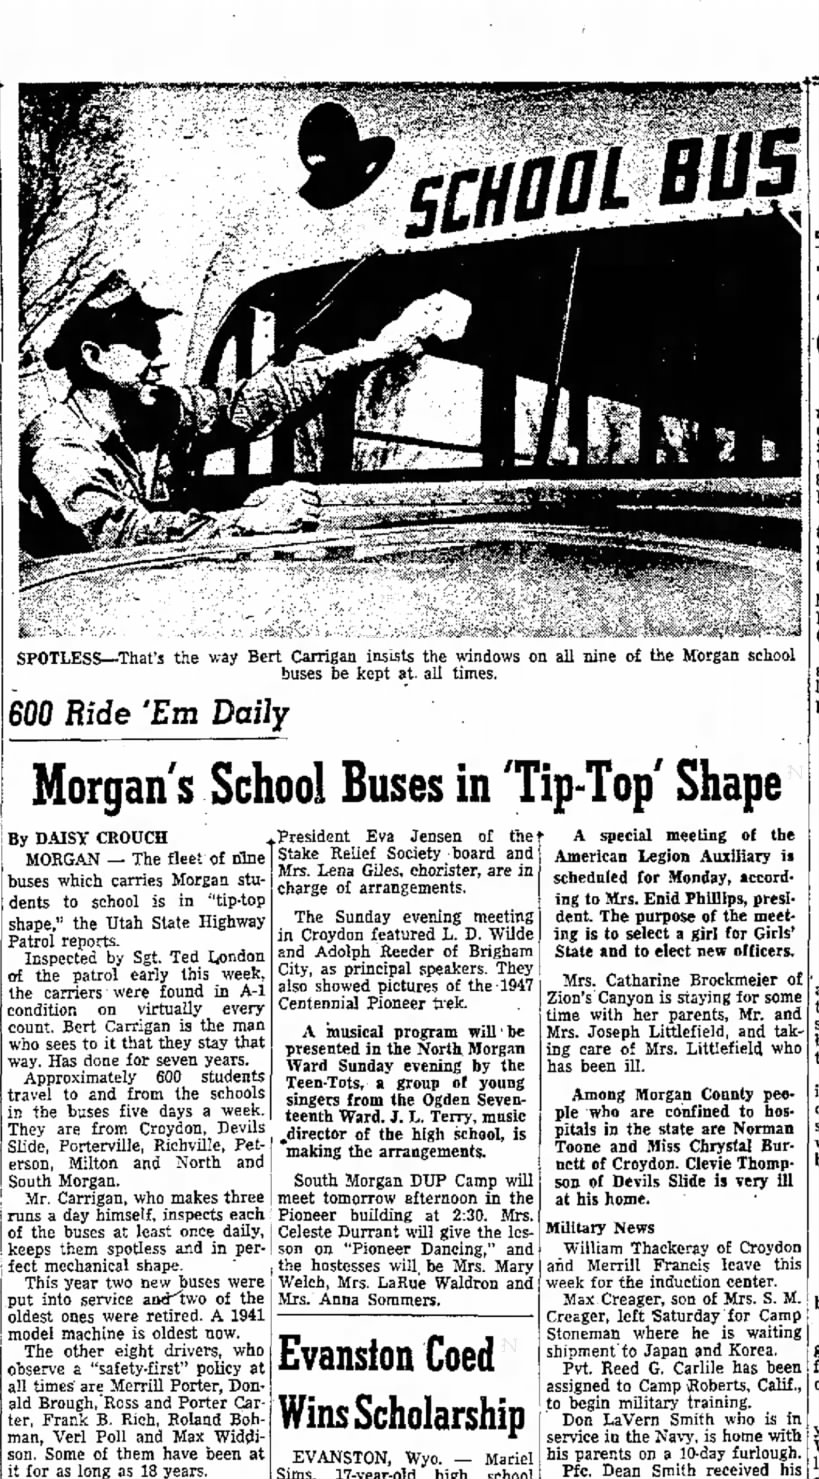 1953 Bert Carrigan cleaning bus windows